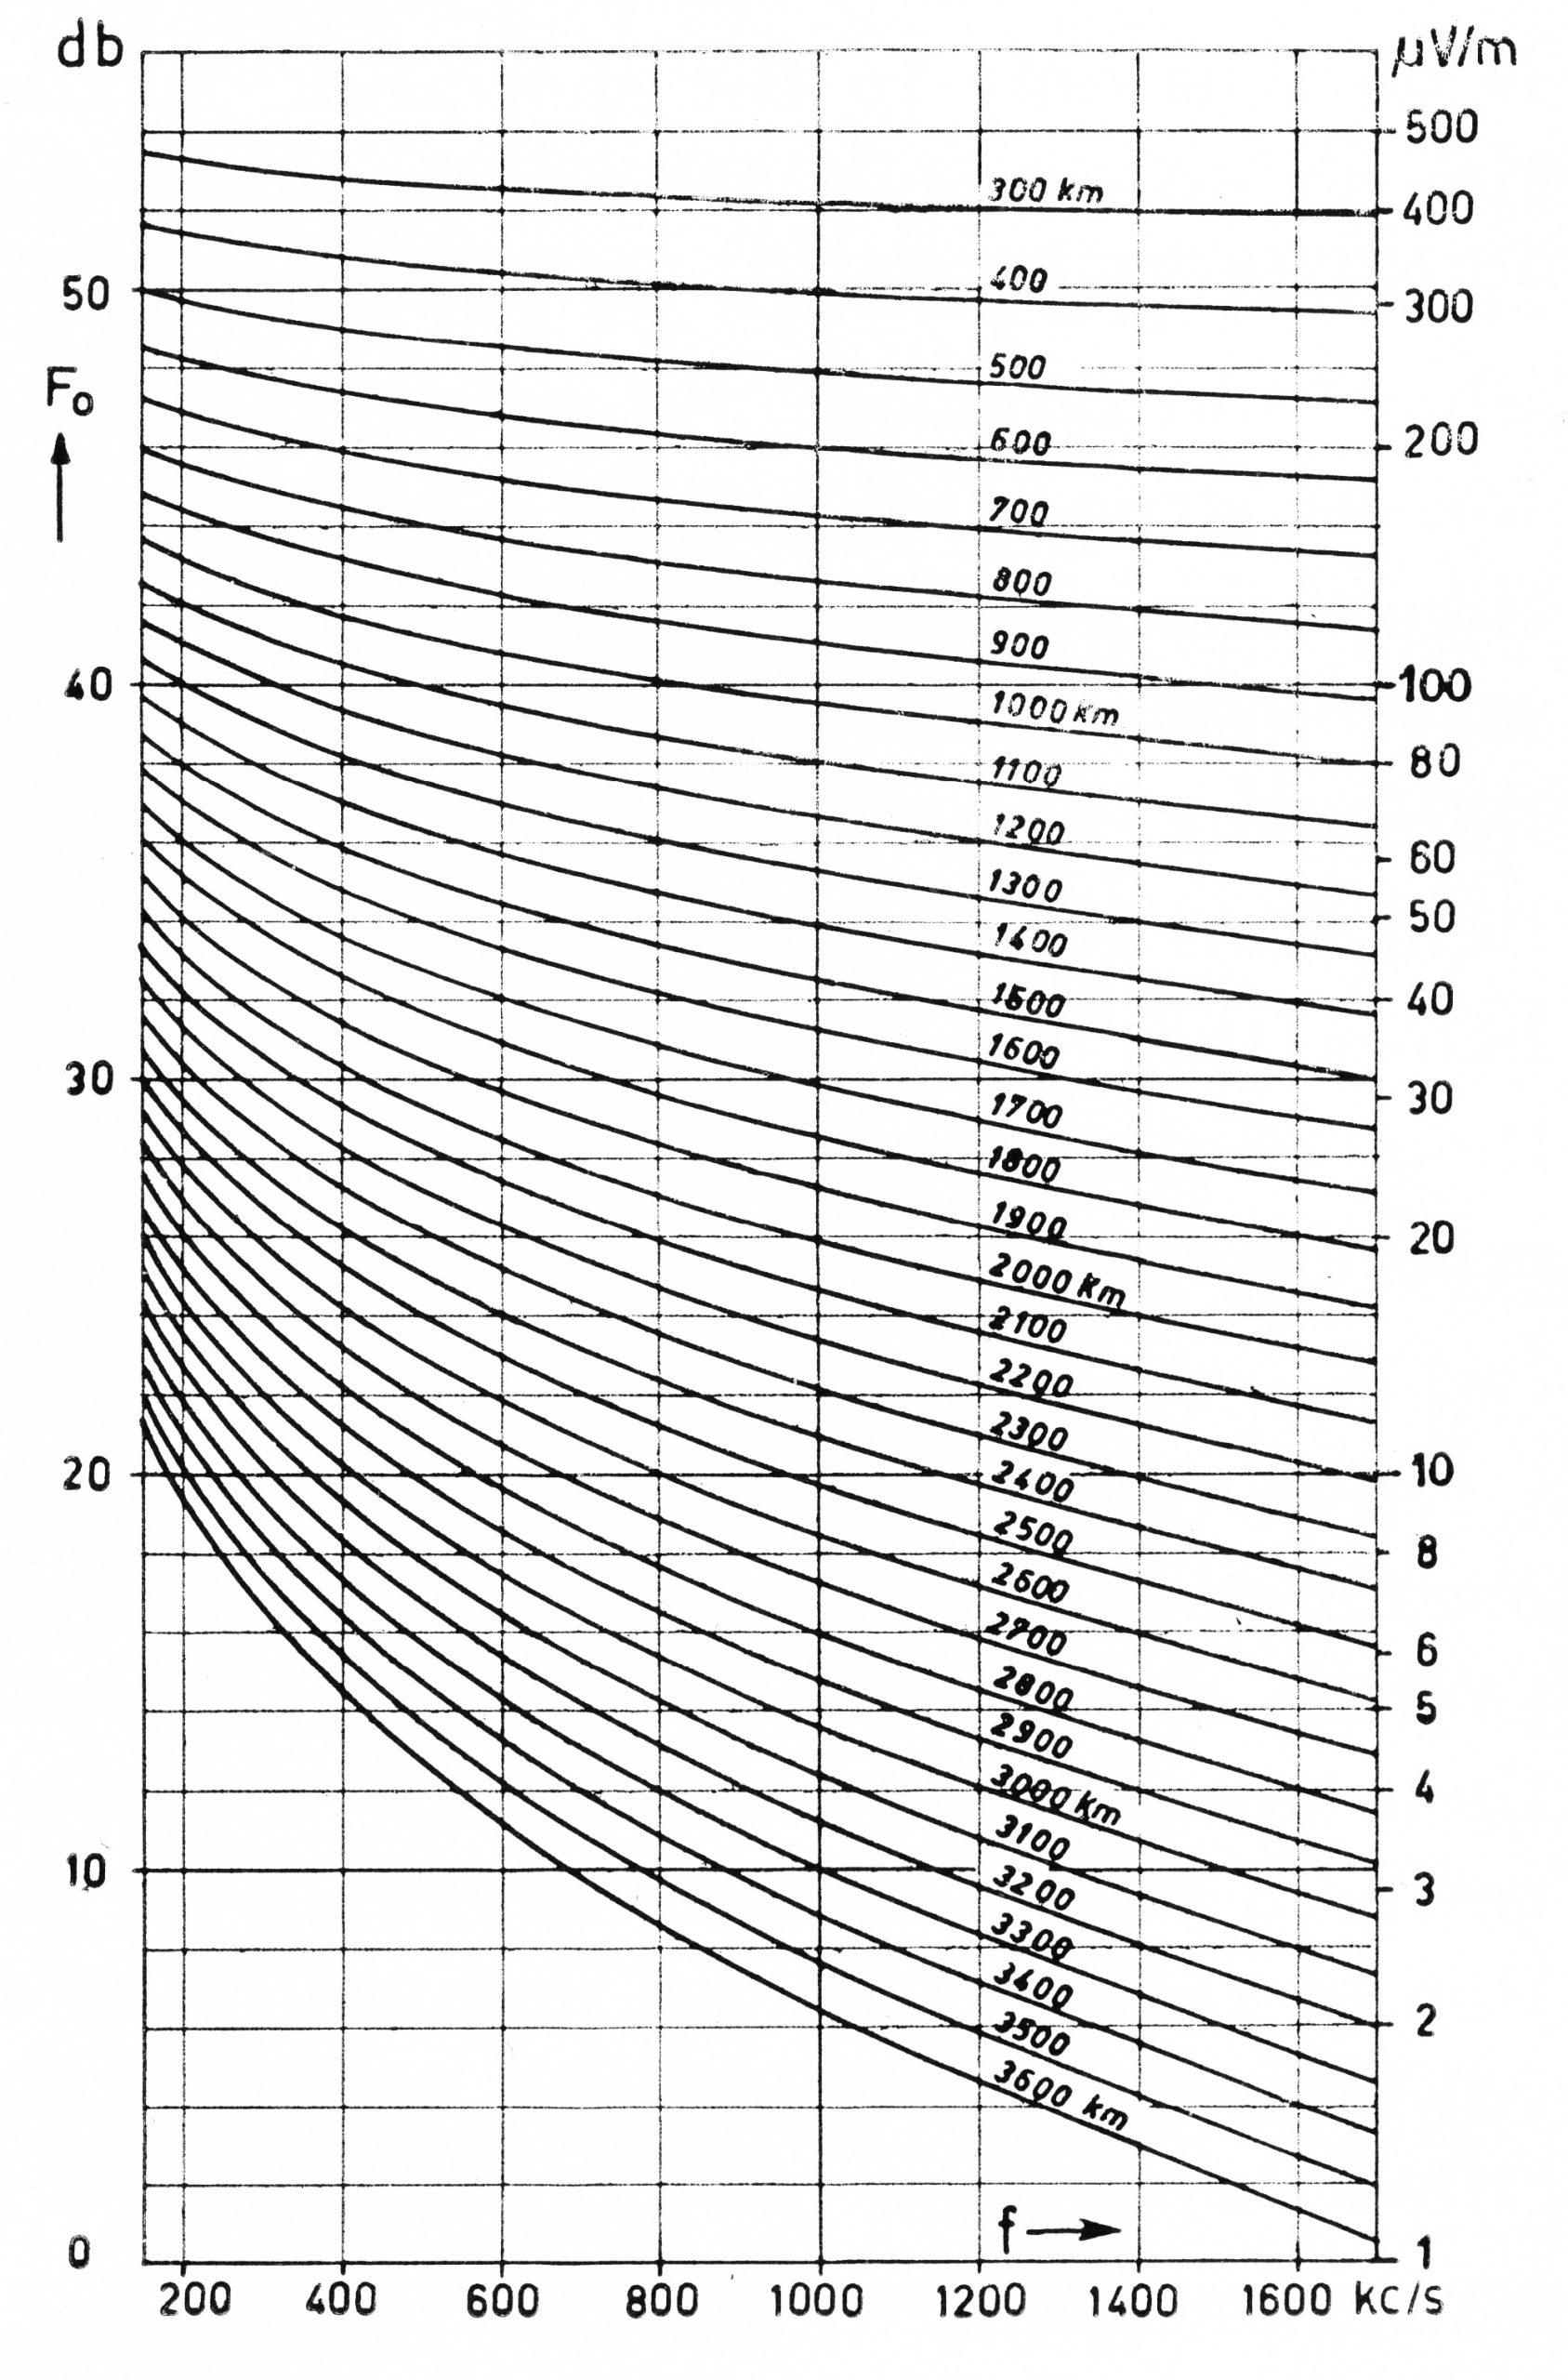 A graph showing signal propagation